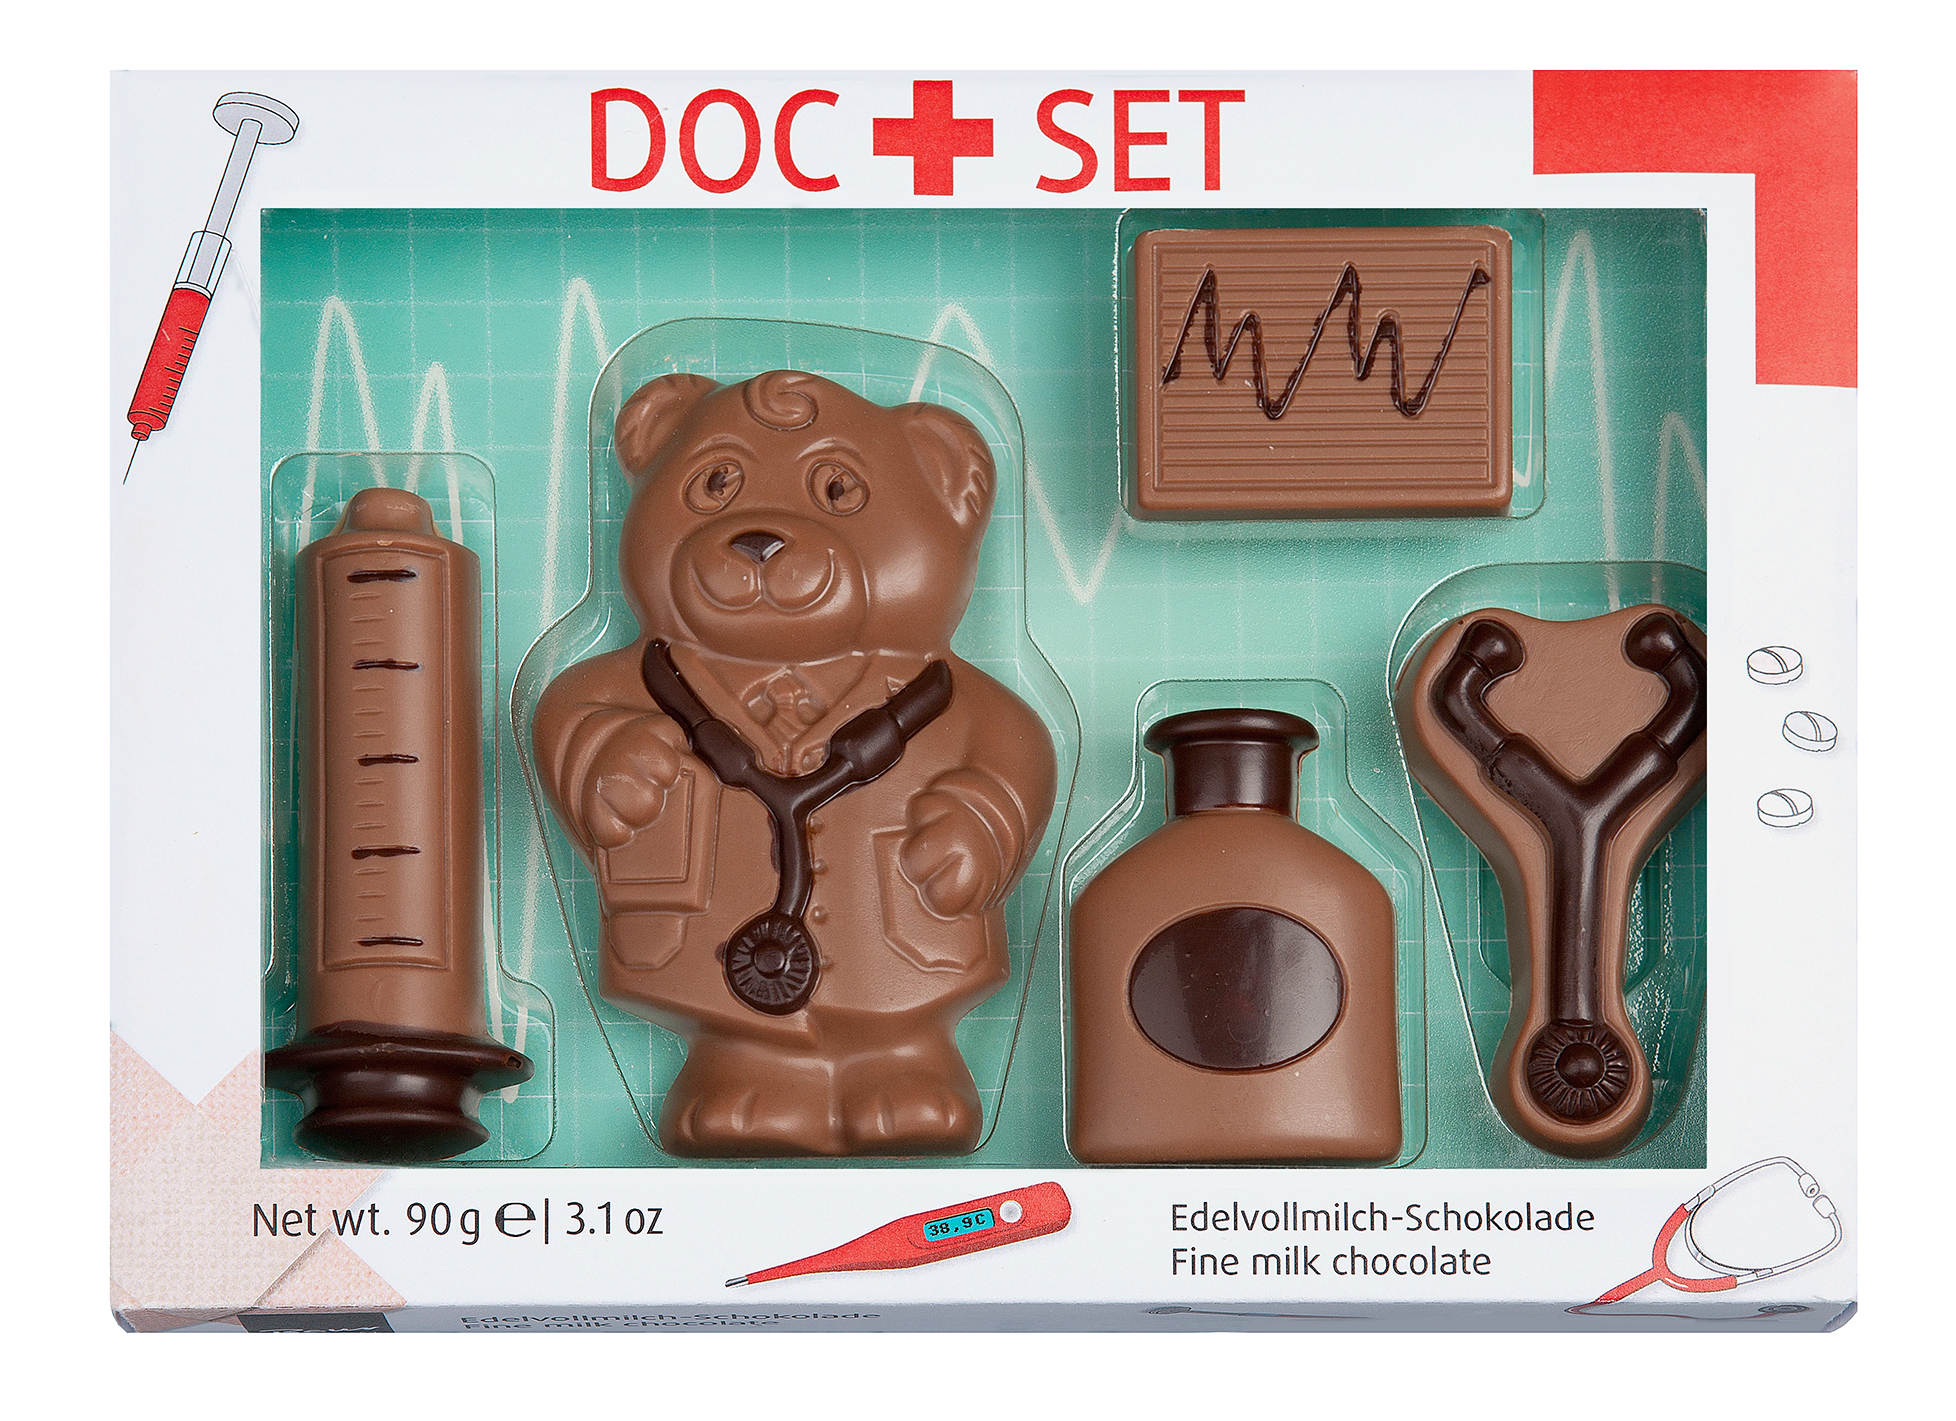 BAUR Čokoládový Set "Doktor" 90g